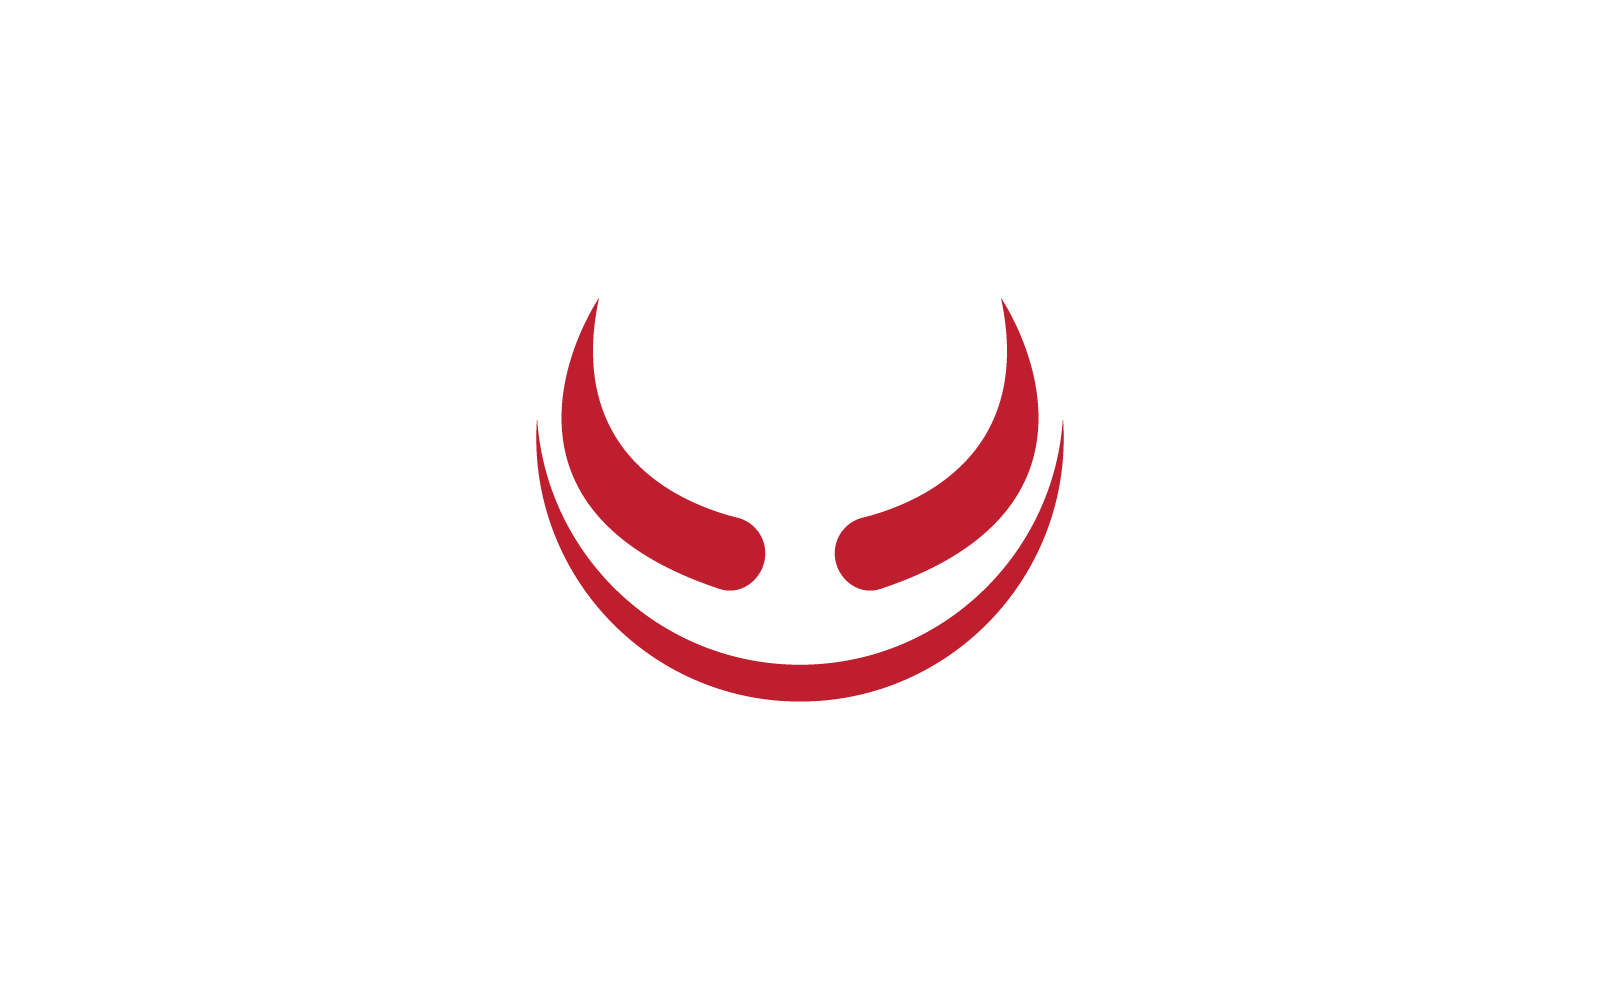 Horn logo illustration vector flat design